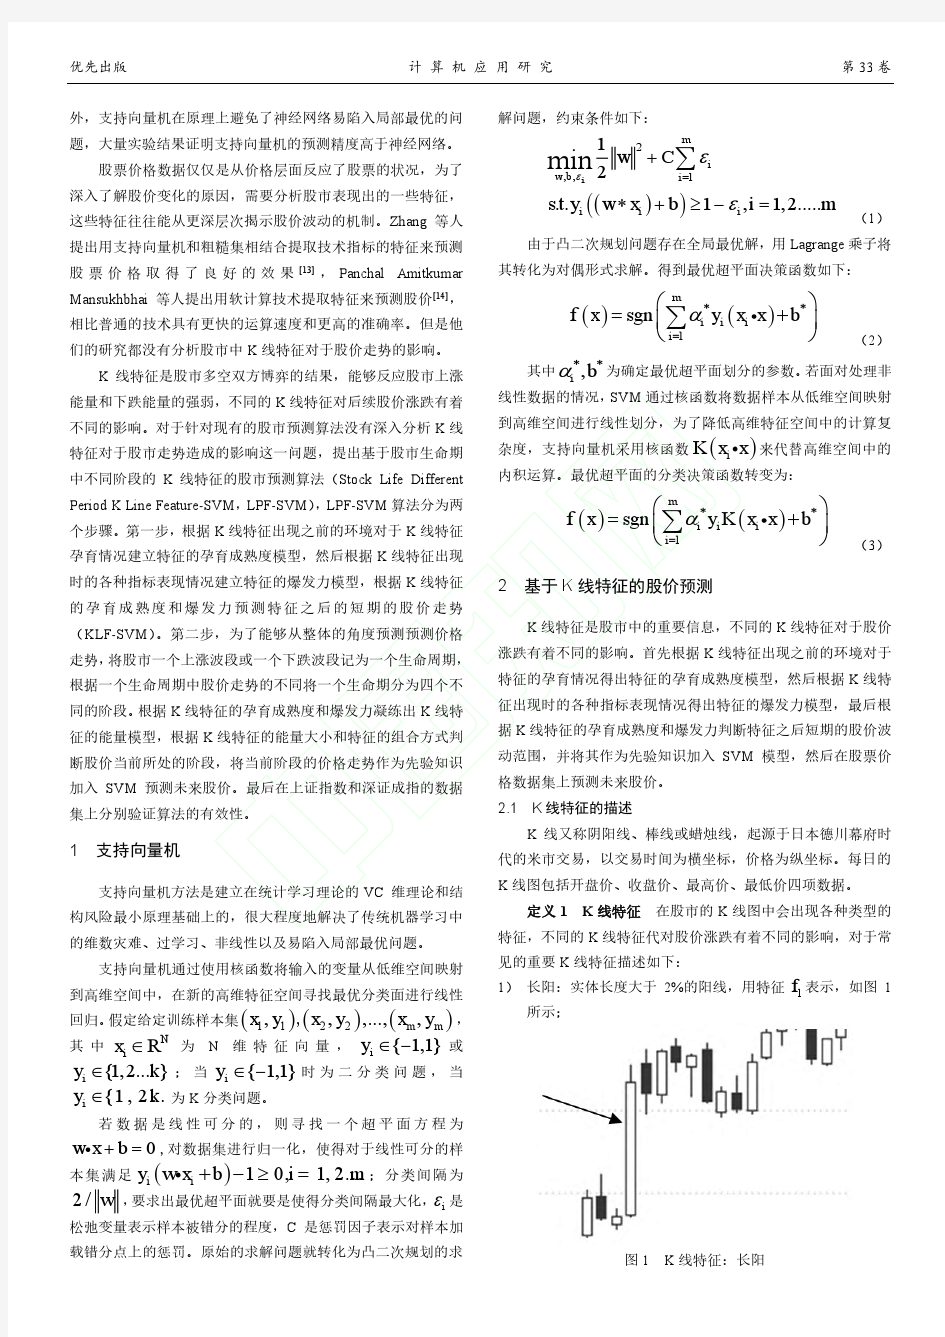 K线能量计算的股市生命期态势预测方法_姚宏亮